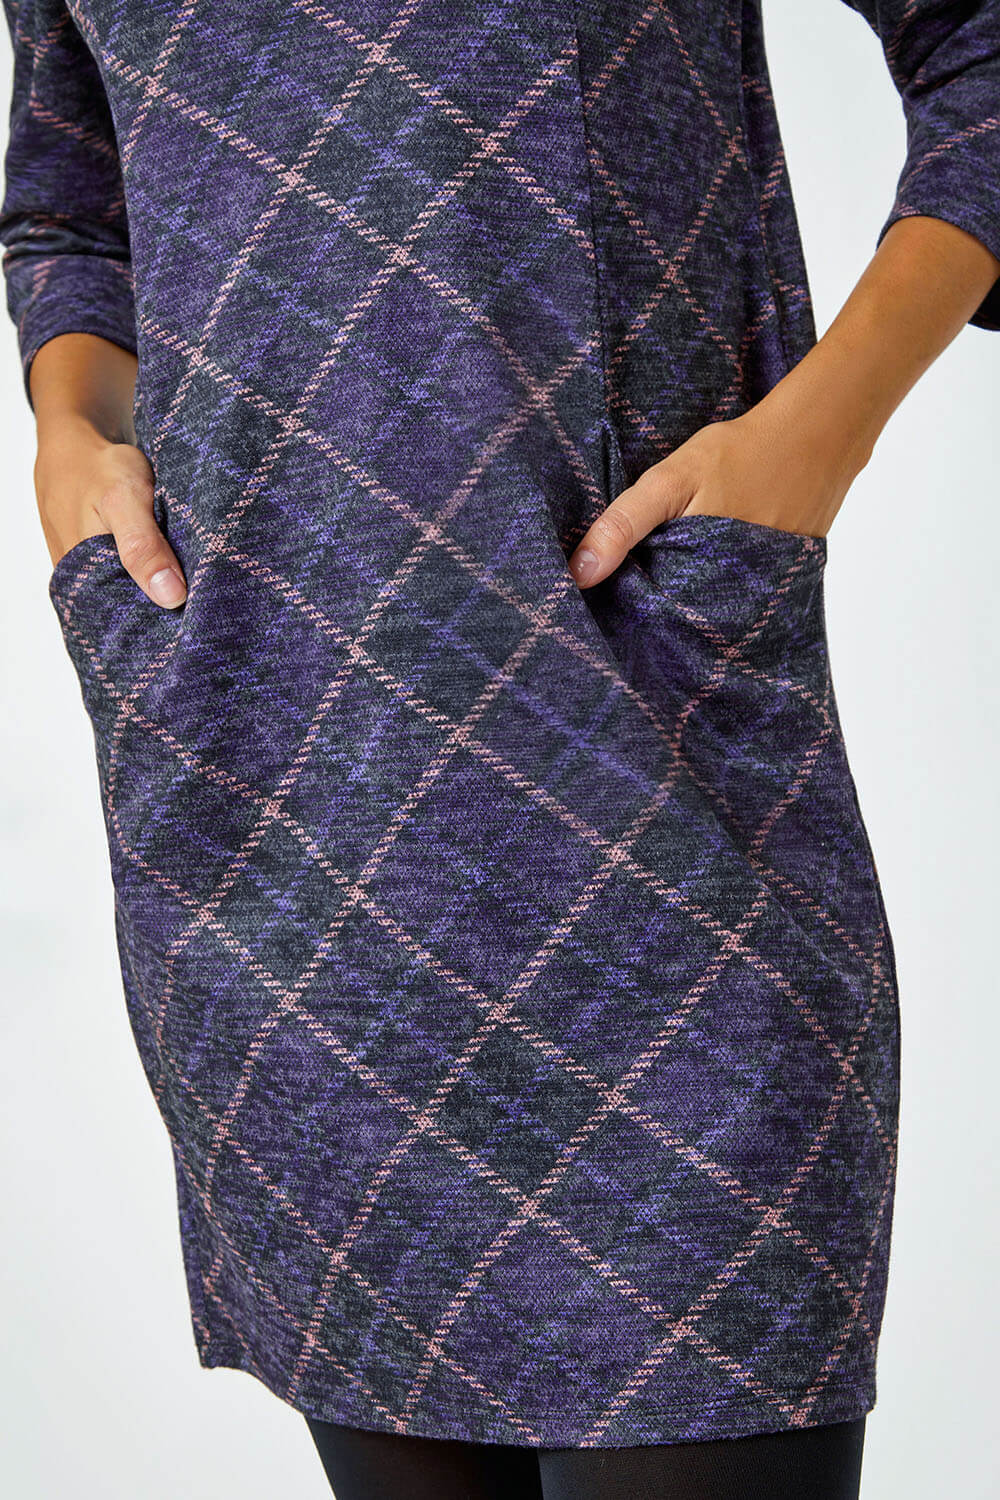 Purple Check Print Pocket Shift Dress, Image 6 of 6